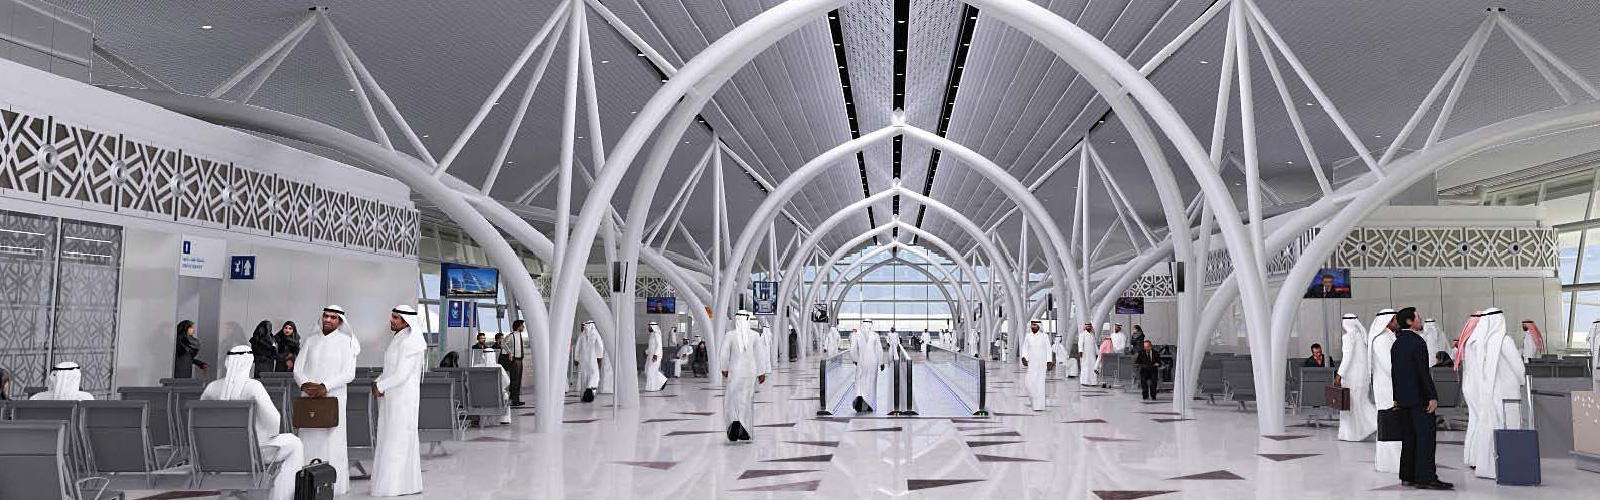 King Abdul Aziz International Airport